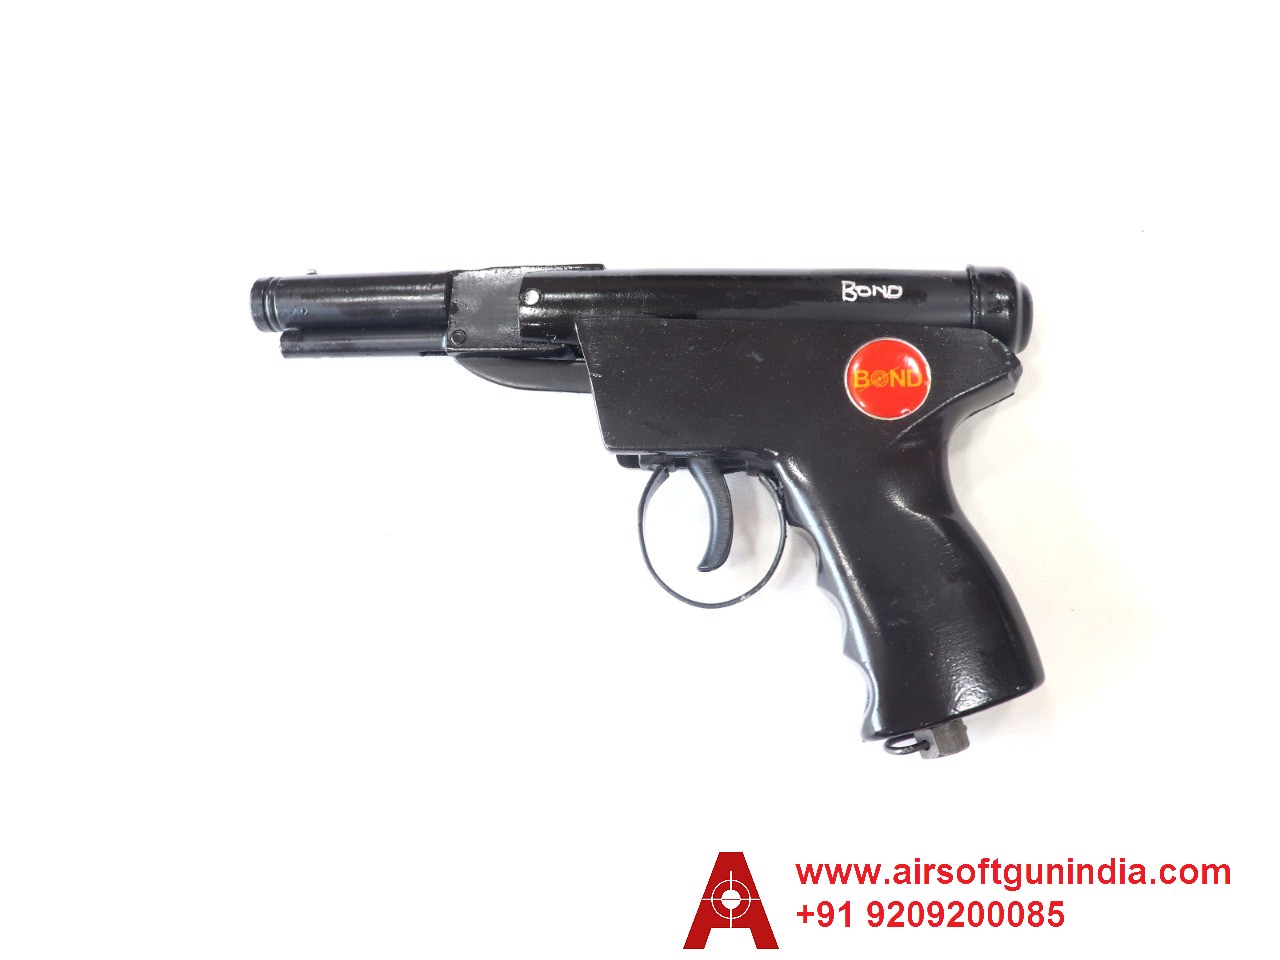 Bond Champion Black Single-Shot .177 Caliber / 4.5 Mm Indian Air Pistol By Airsoft Gun India.